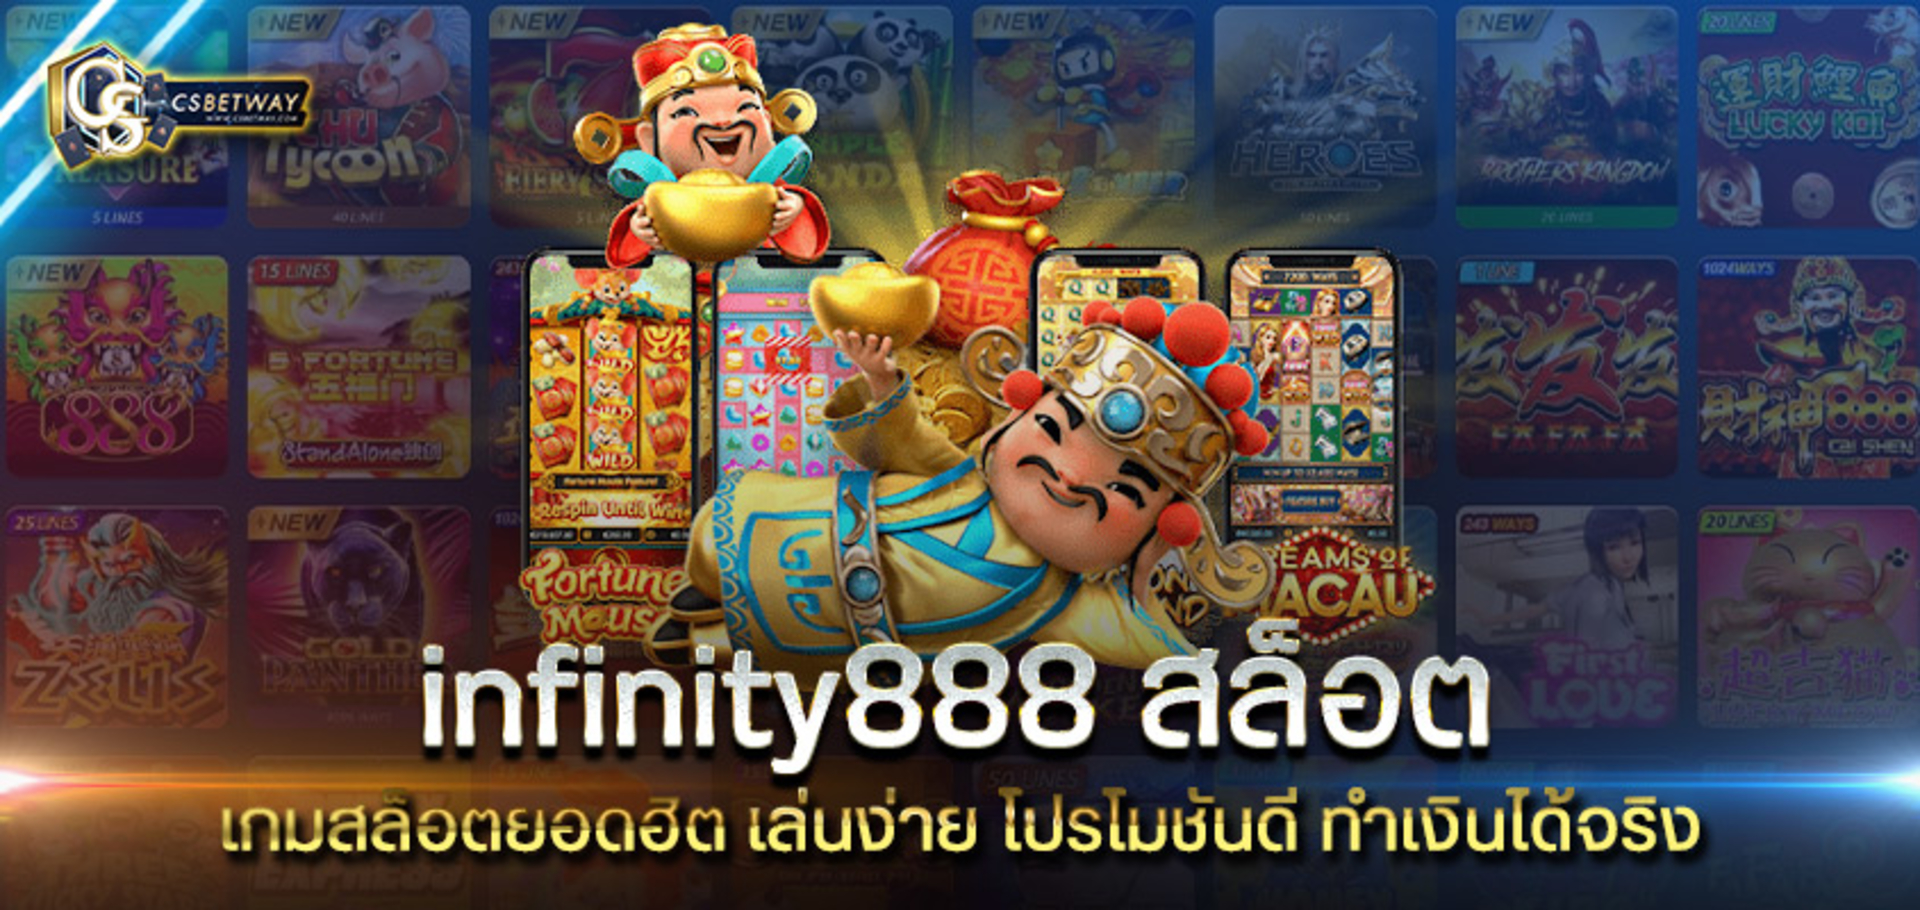 infinity888 สล็อต เกมสล็อตยอดฮิต เล่นง่าย infinity888 โปรโมชันดี ทำเงินได้จริง